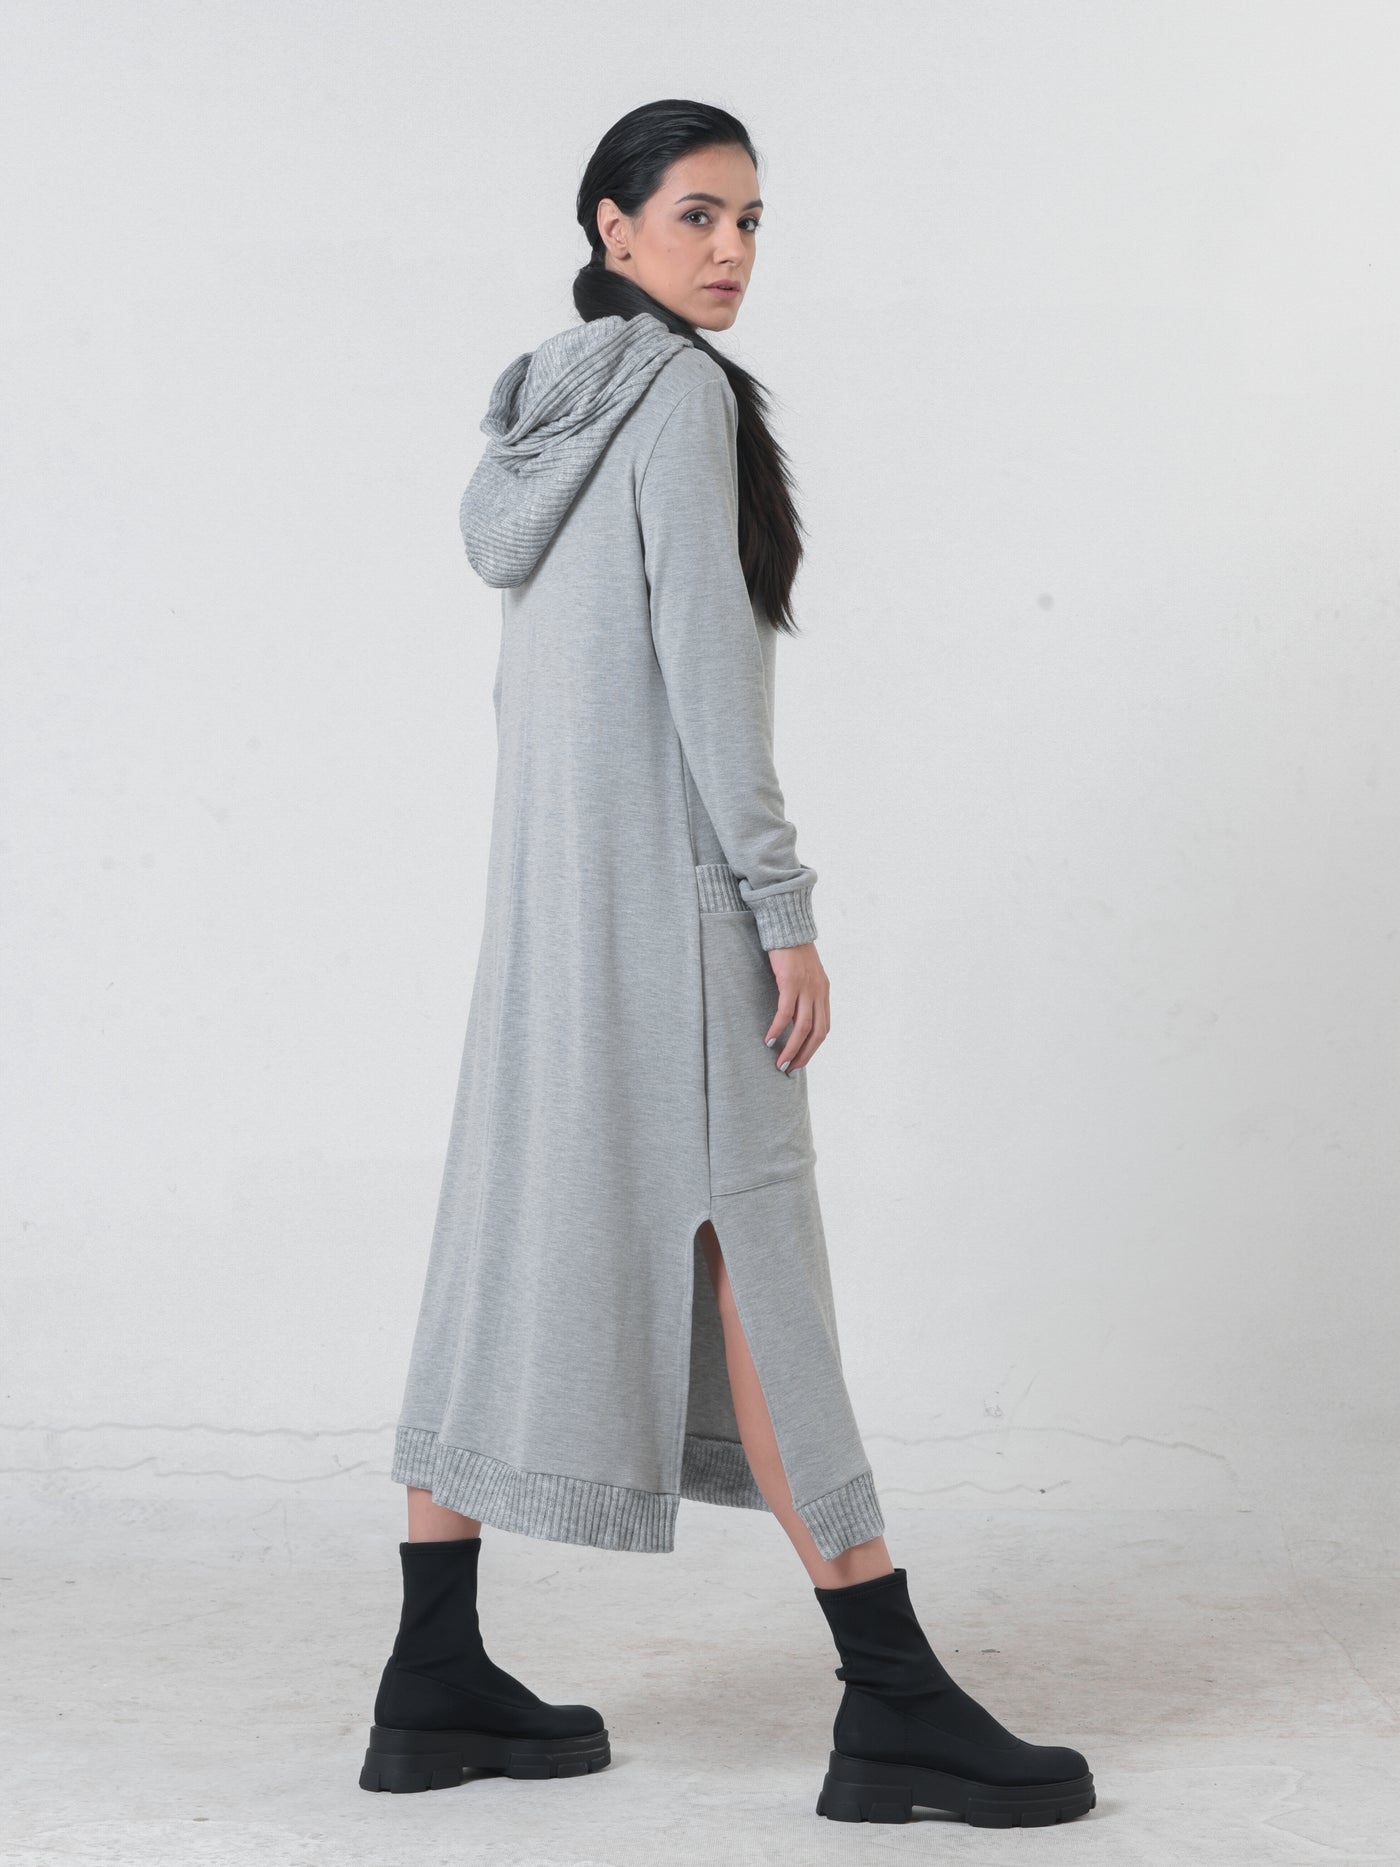 Knitted Long Sleeve Hooded Dress In Light Gray